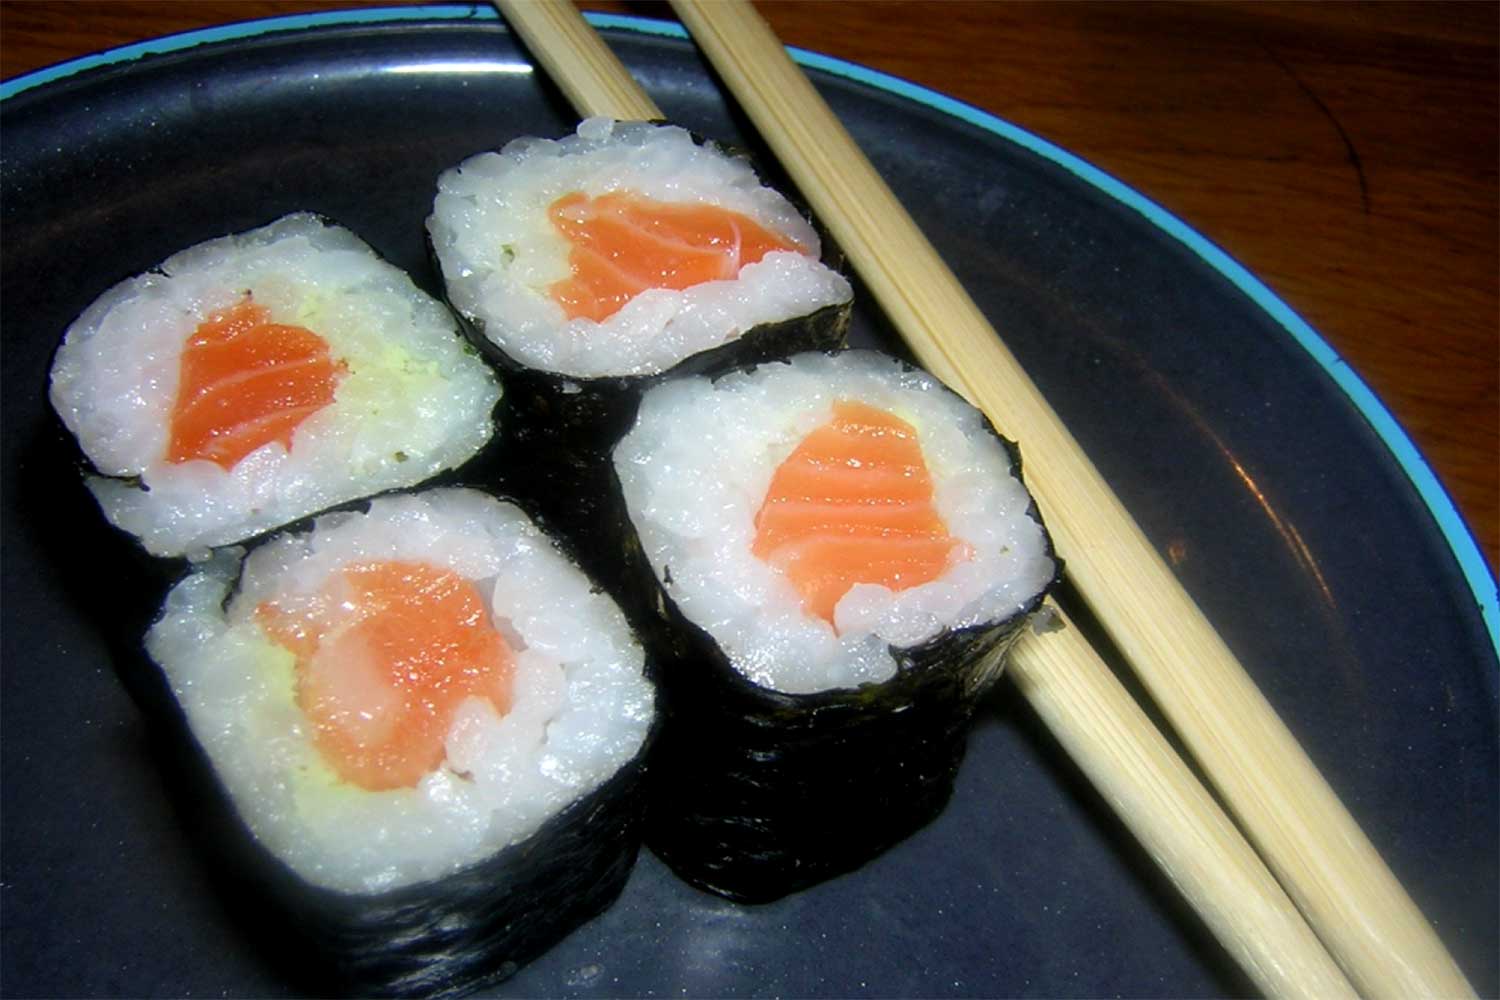 Bezorg-sushi: 31% bevat teveel bacteriën